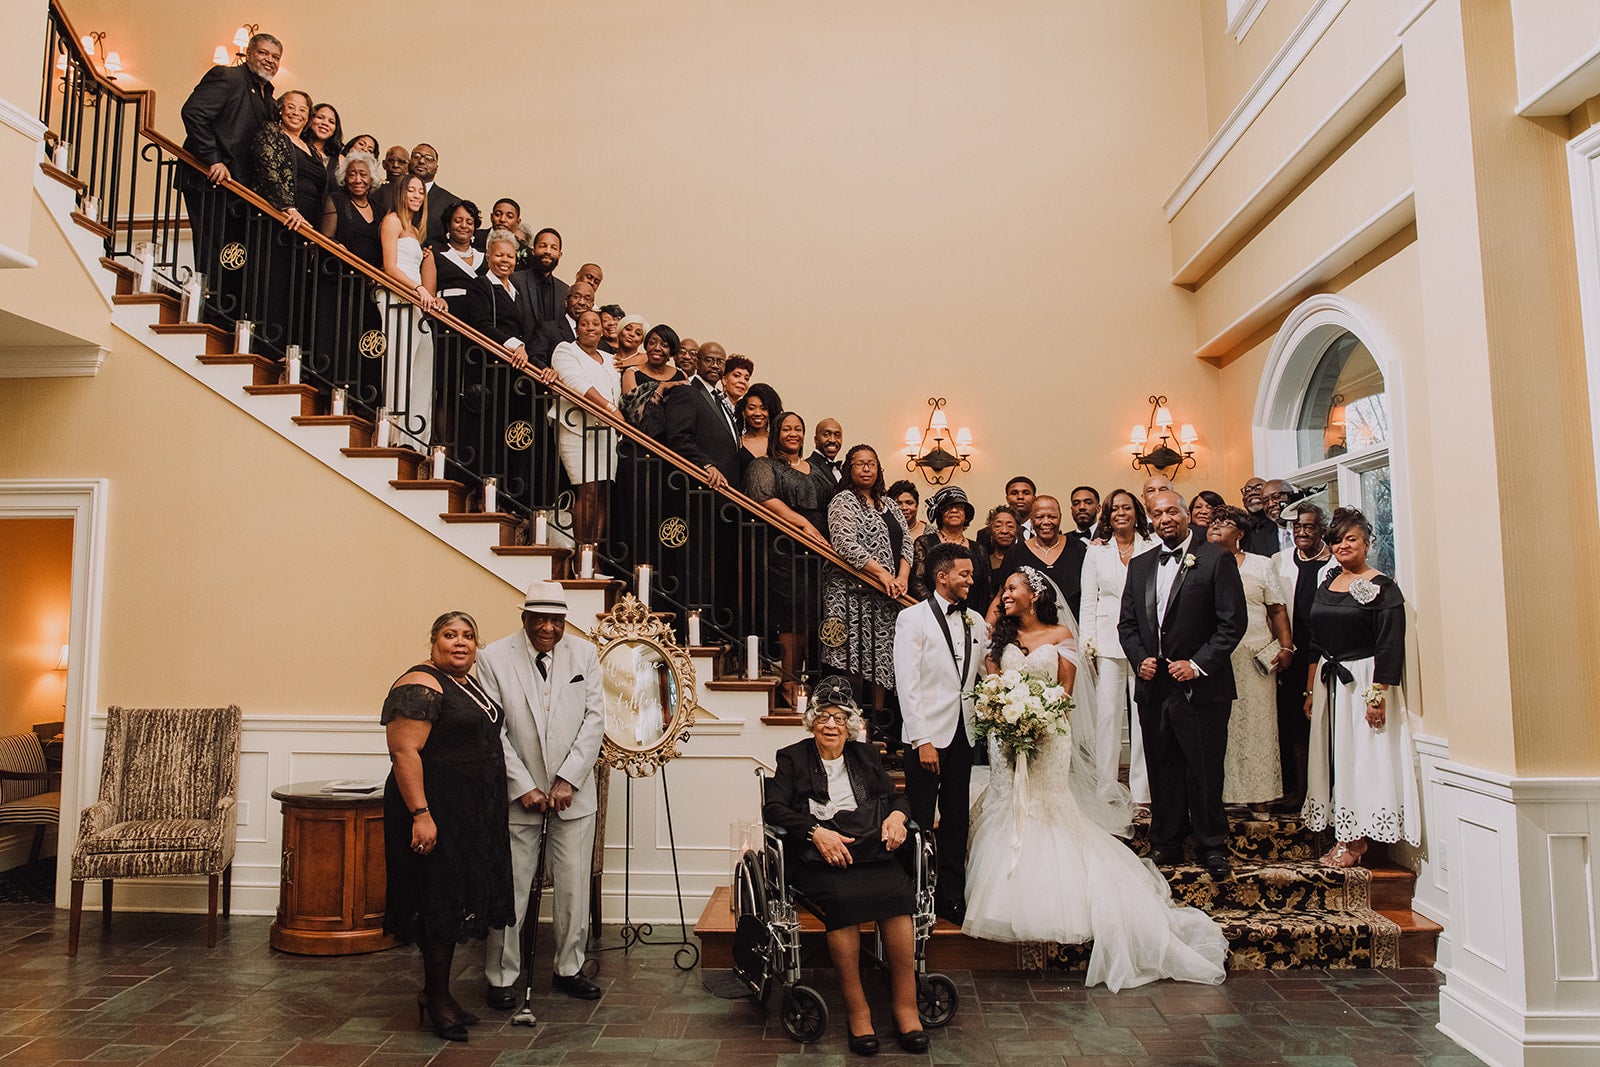 Bridal Bliss: Ashley And Brandon's North Carolina Wedding Had ALL The Southern Charm